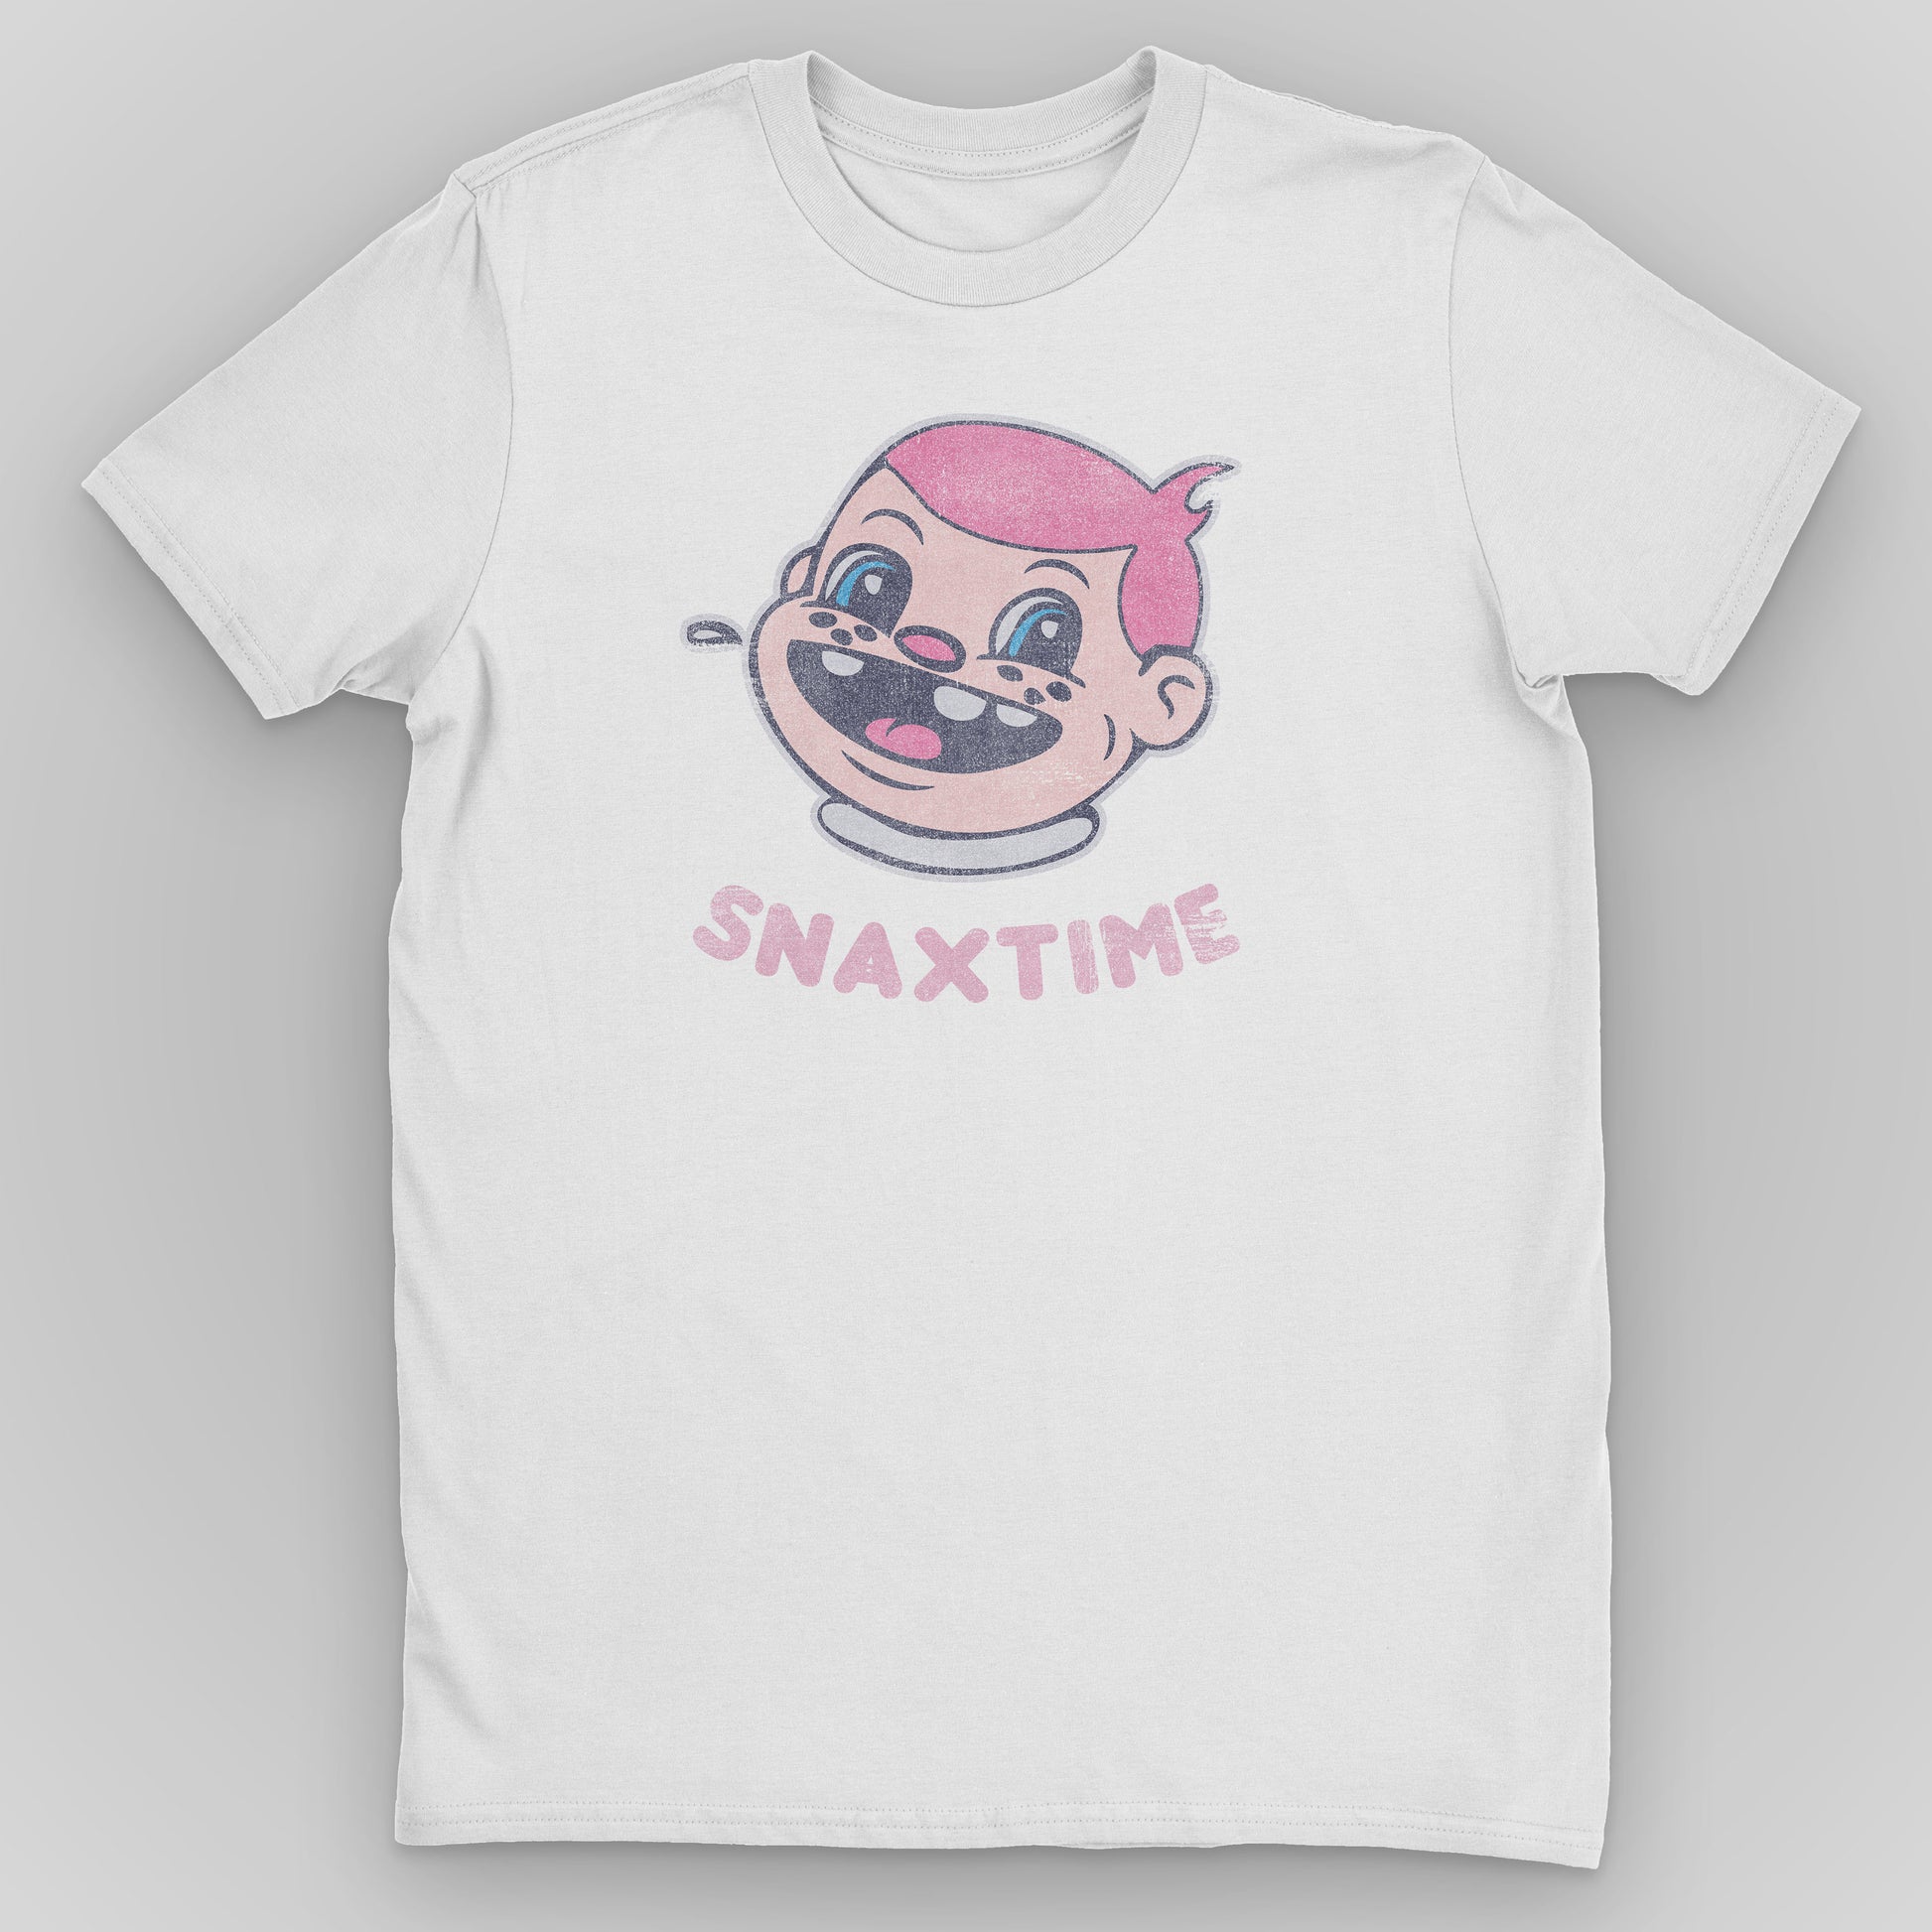 White Snaxtime Original Graphic T-Shirt by Snaxtime